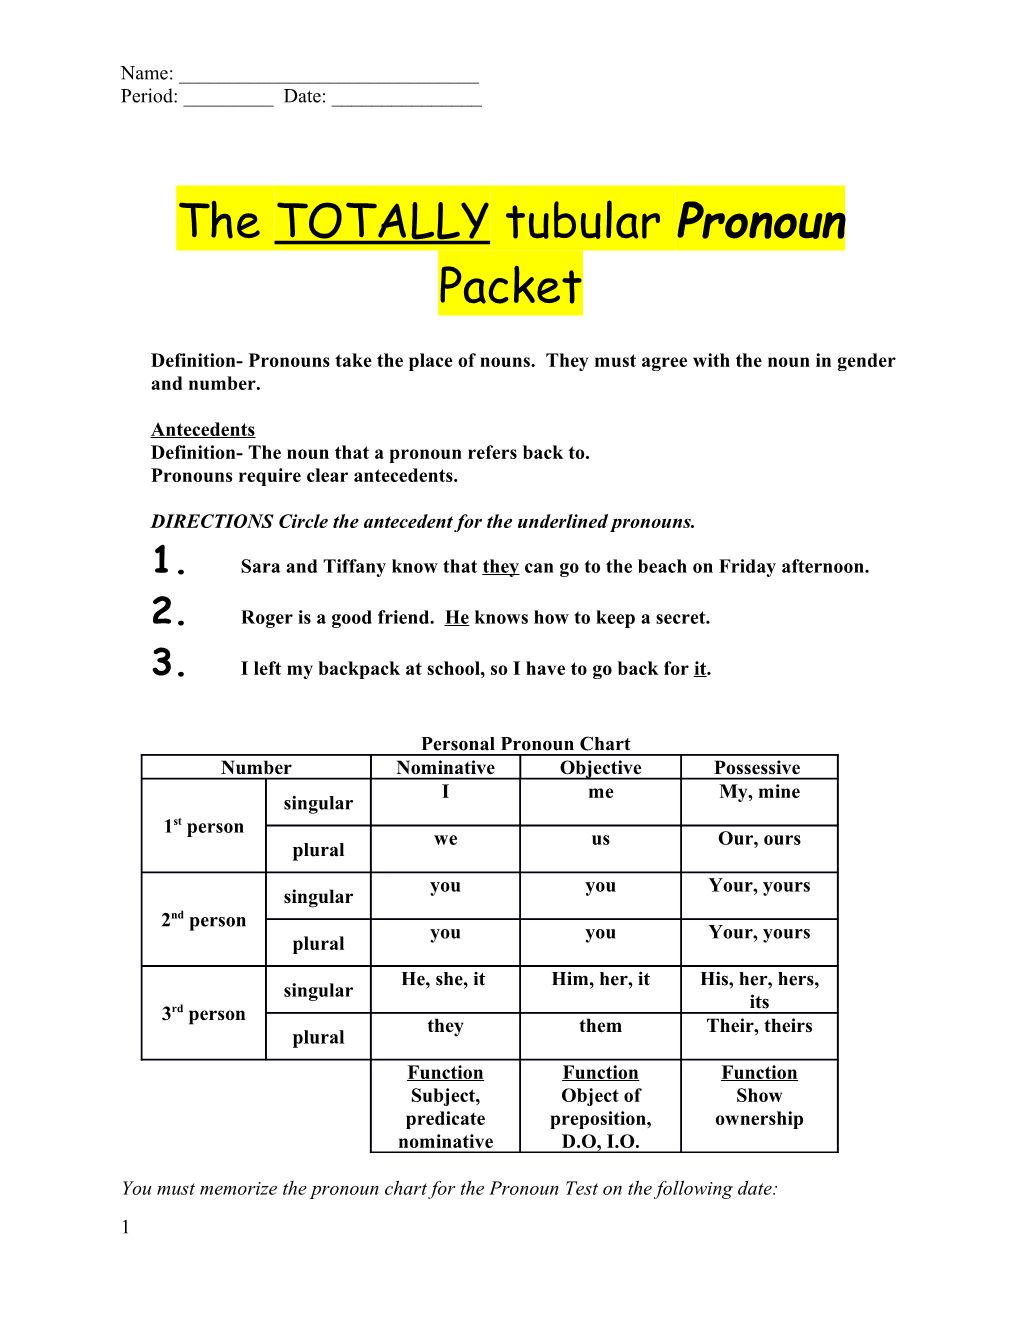 The TOTALLY Tubular Pronoun Packet